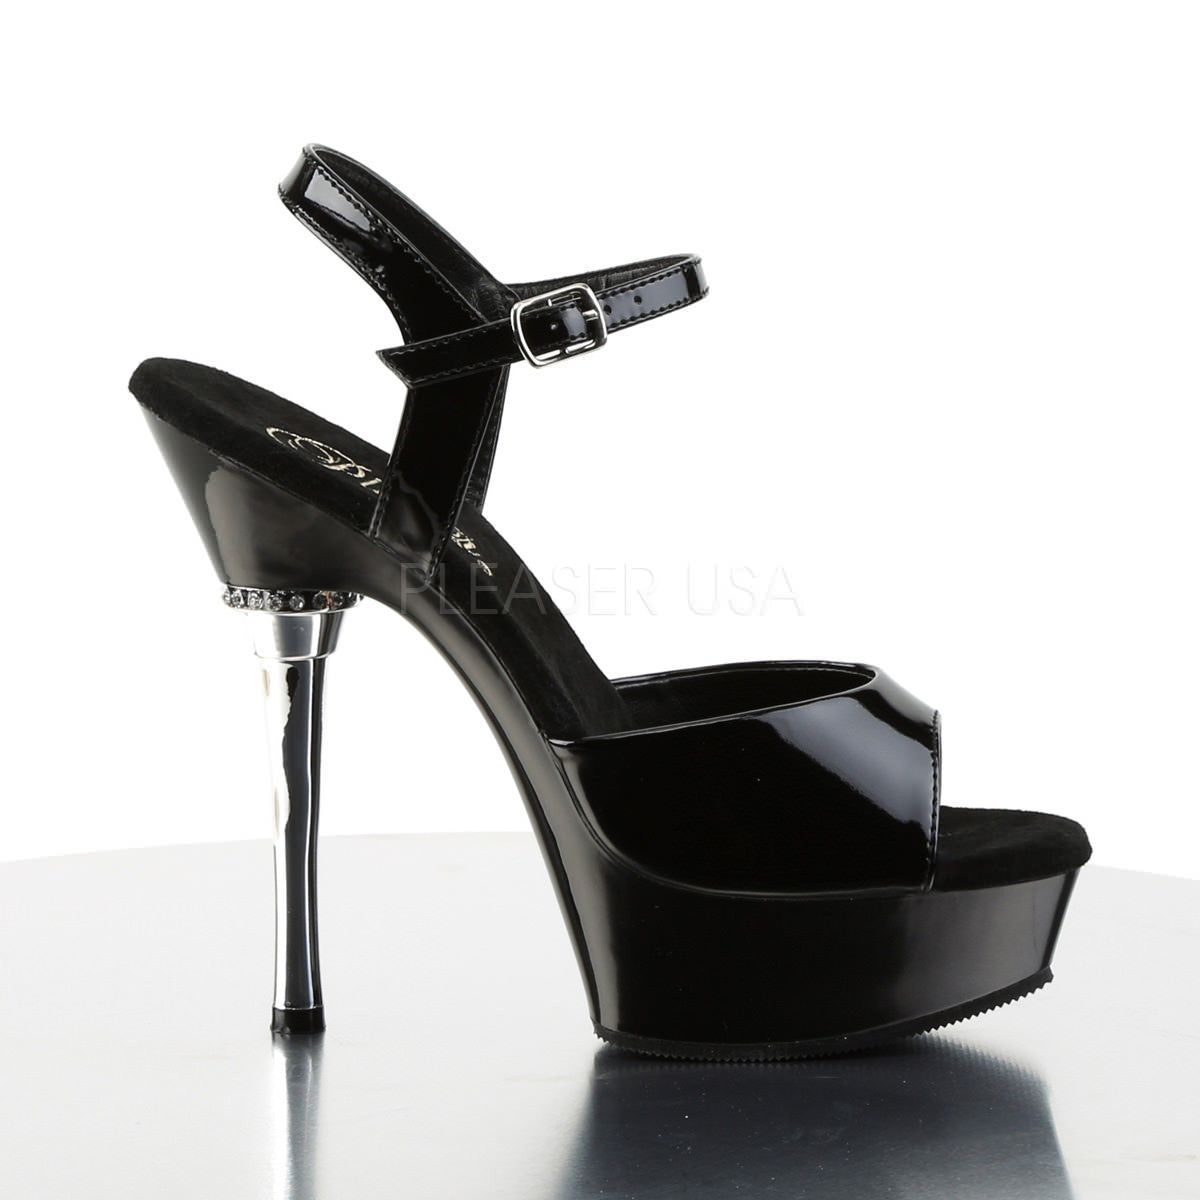 5 Inch Heel ALLURE-609 Black Patent